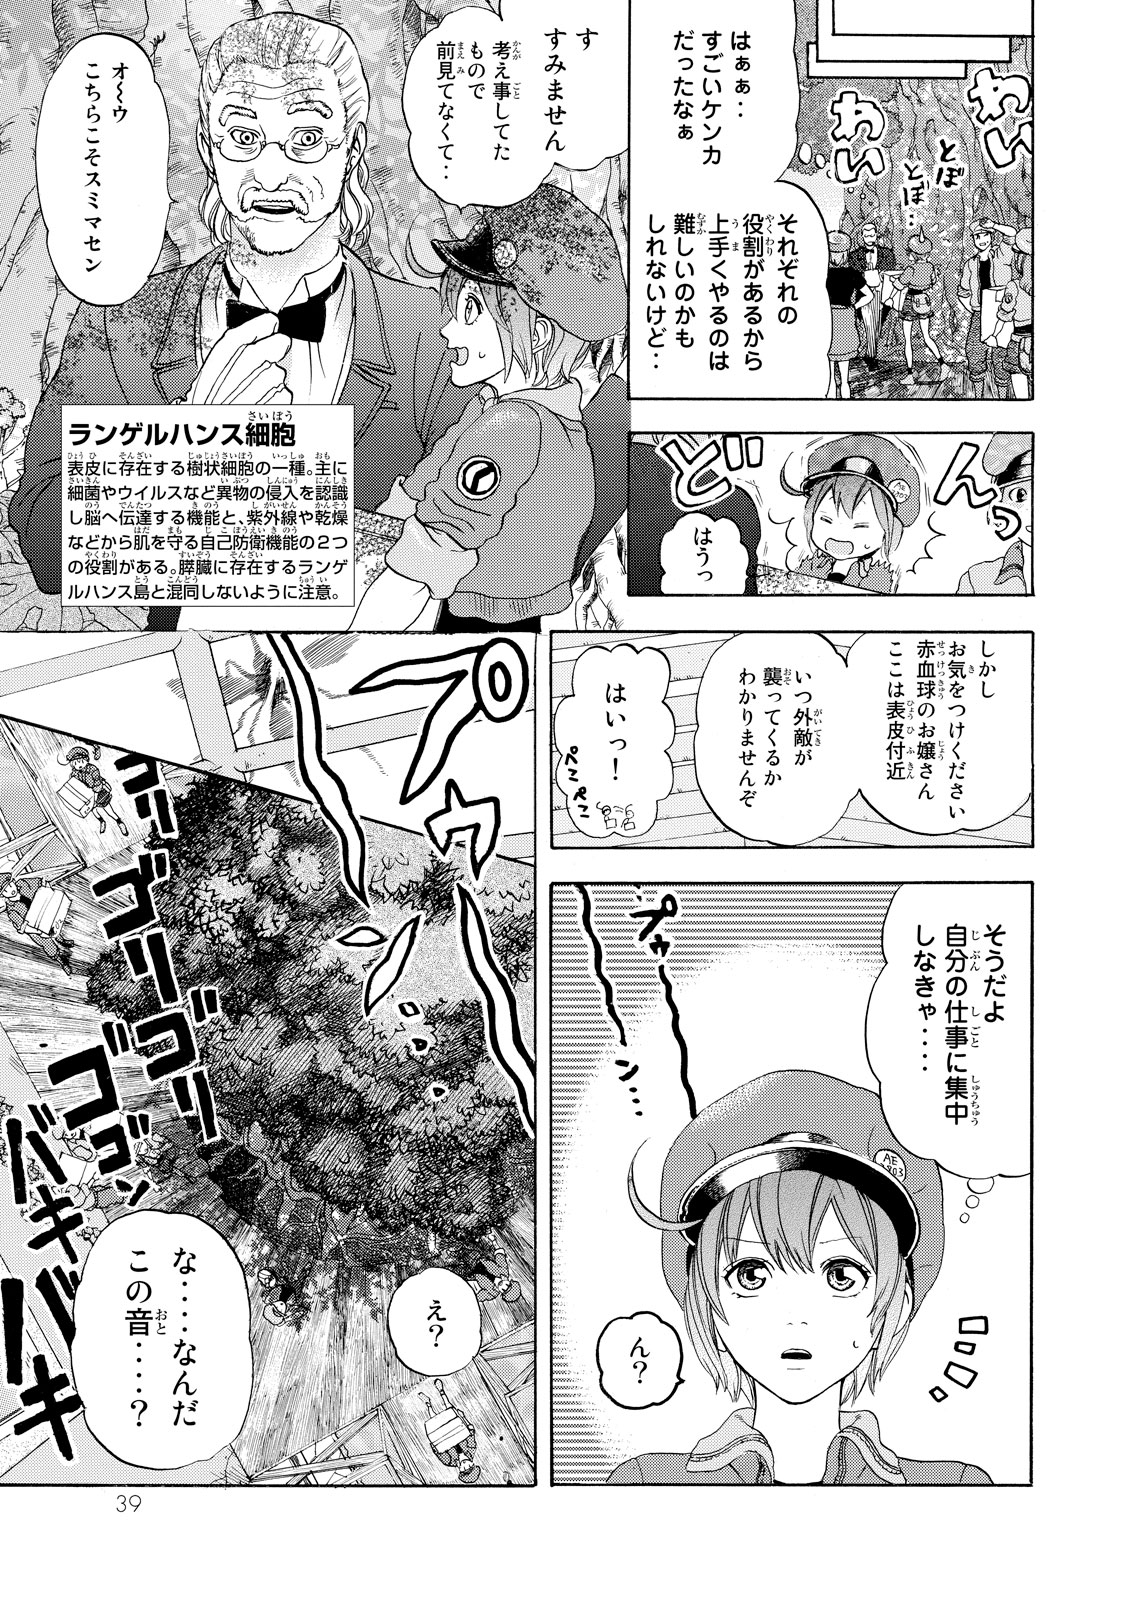 Hataraku Saibou - Chapter 16 - Page 7